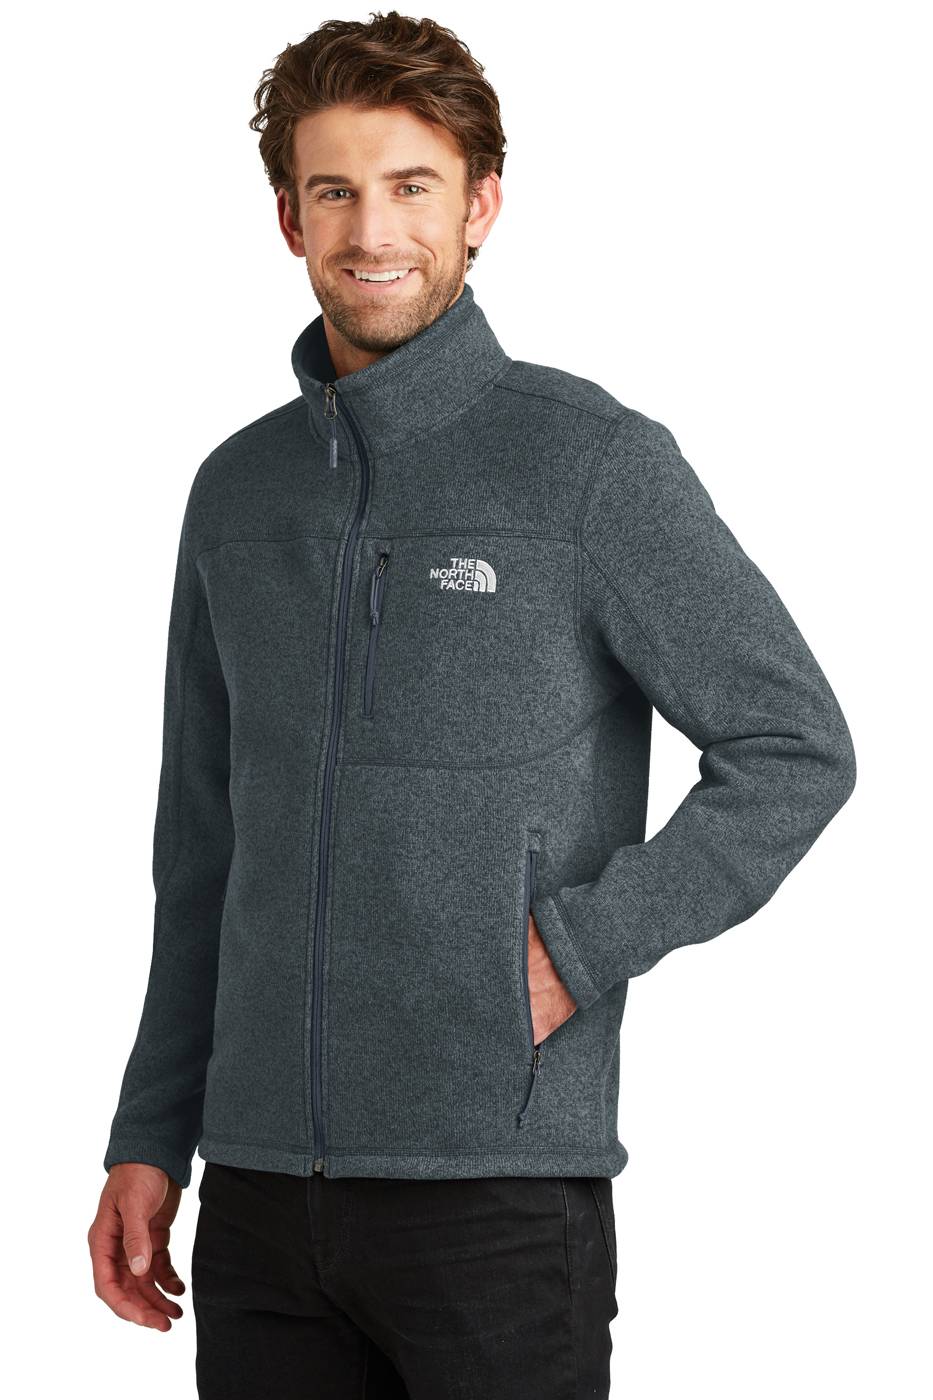 The North Face Men's Custom Sweater Fleece Jacket